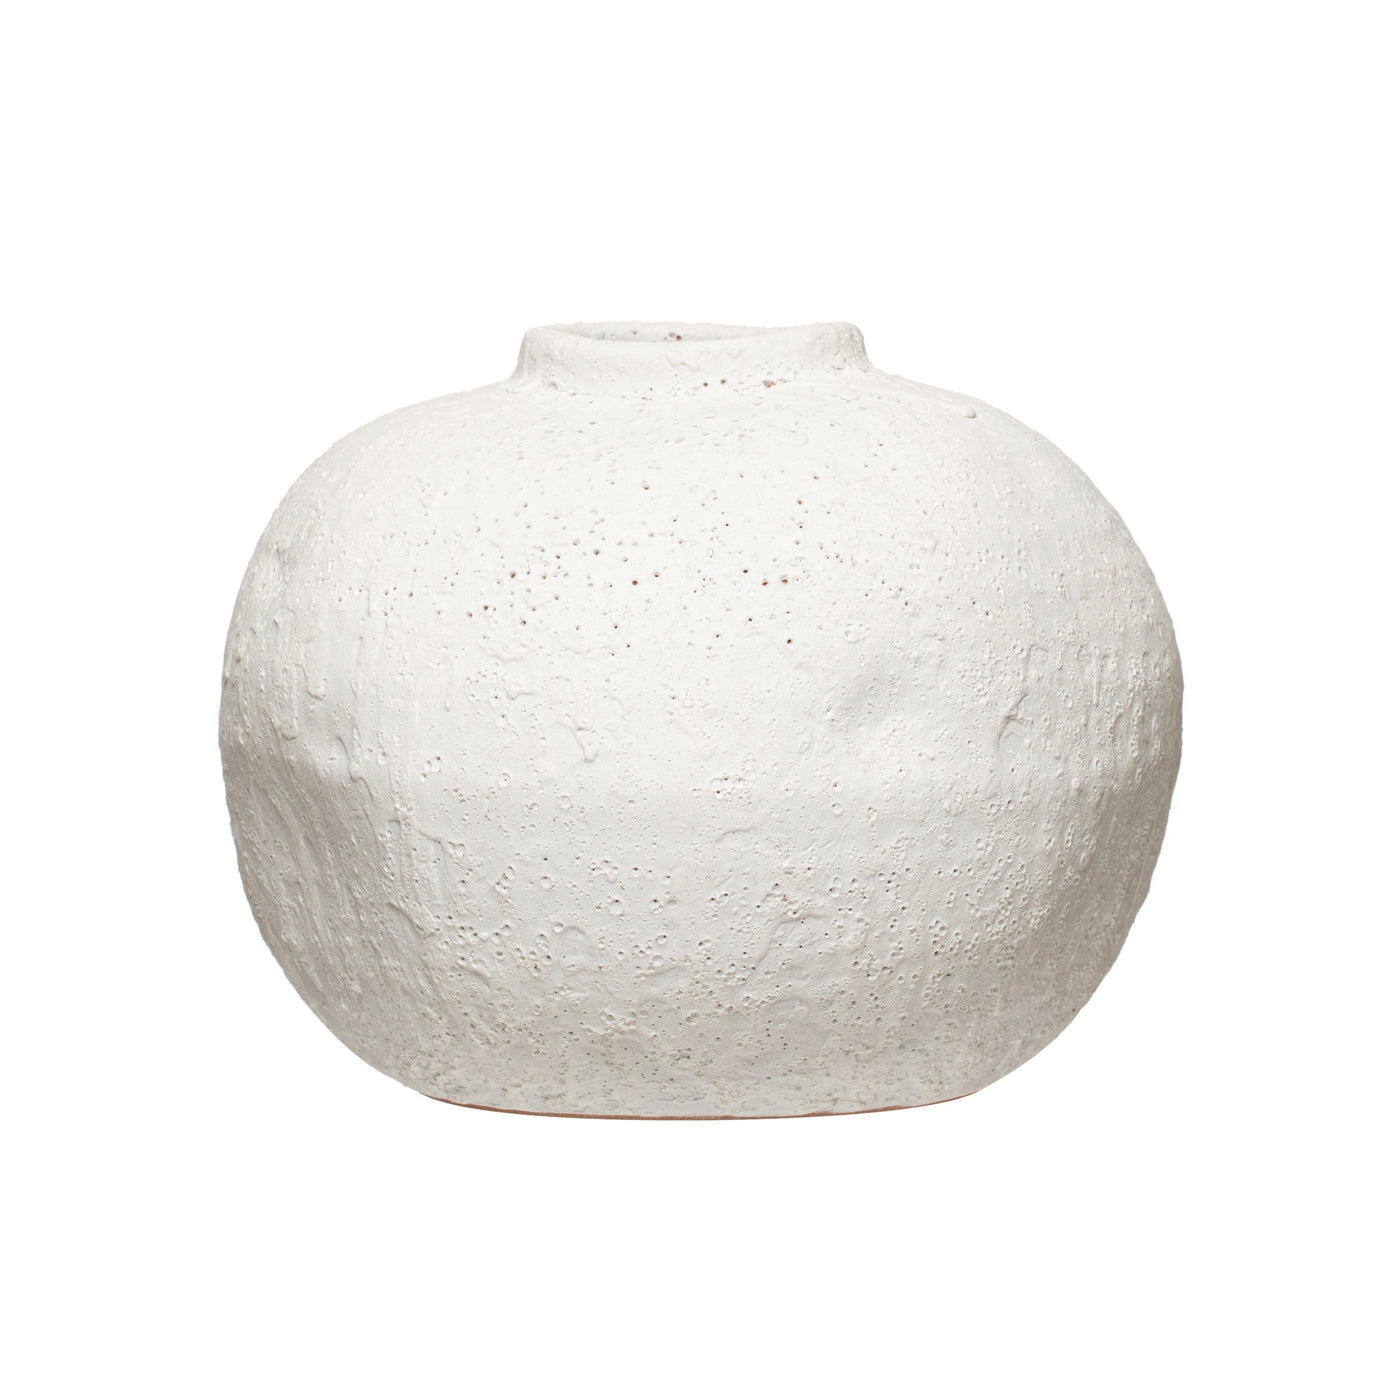 Vase de forme organique en terre cuite 6-3/4" rond X 5-1/2"H, volcan
Finition, blanc mat (Each One Will V